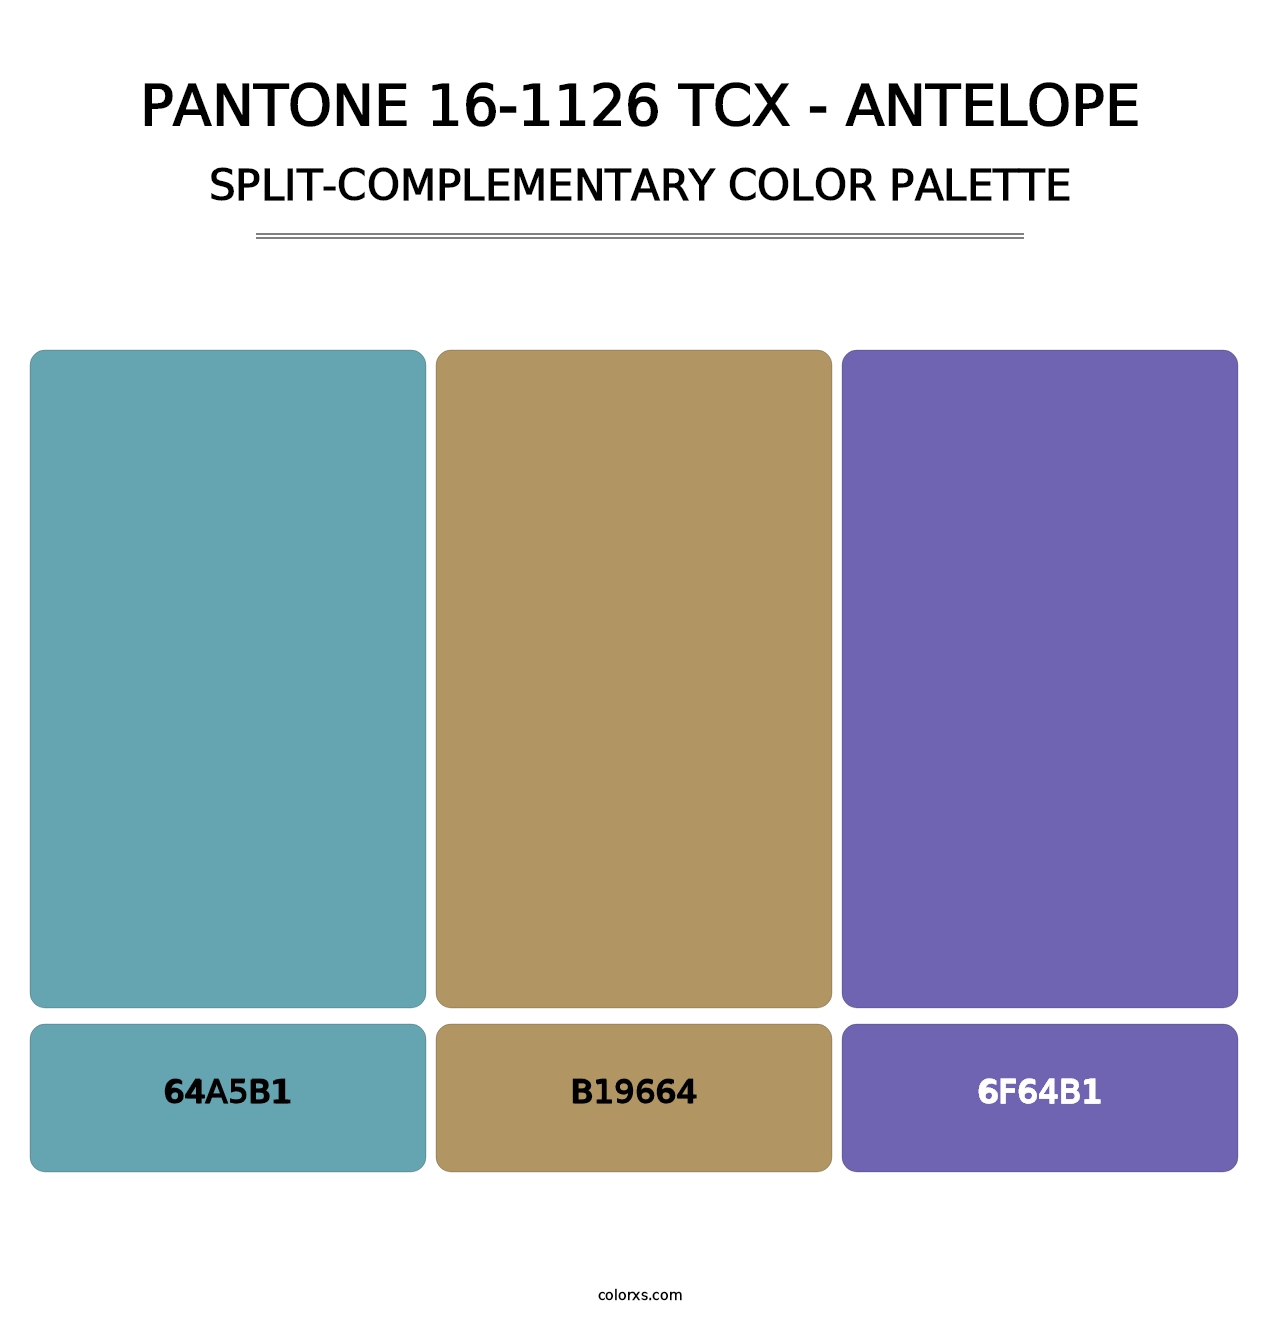 PANTONE 16-1126 TCX - Antelope - Split-Complementary Color Palette